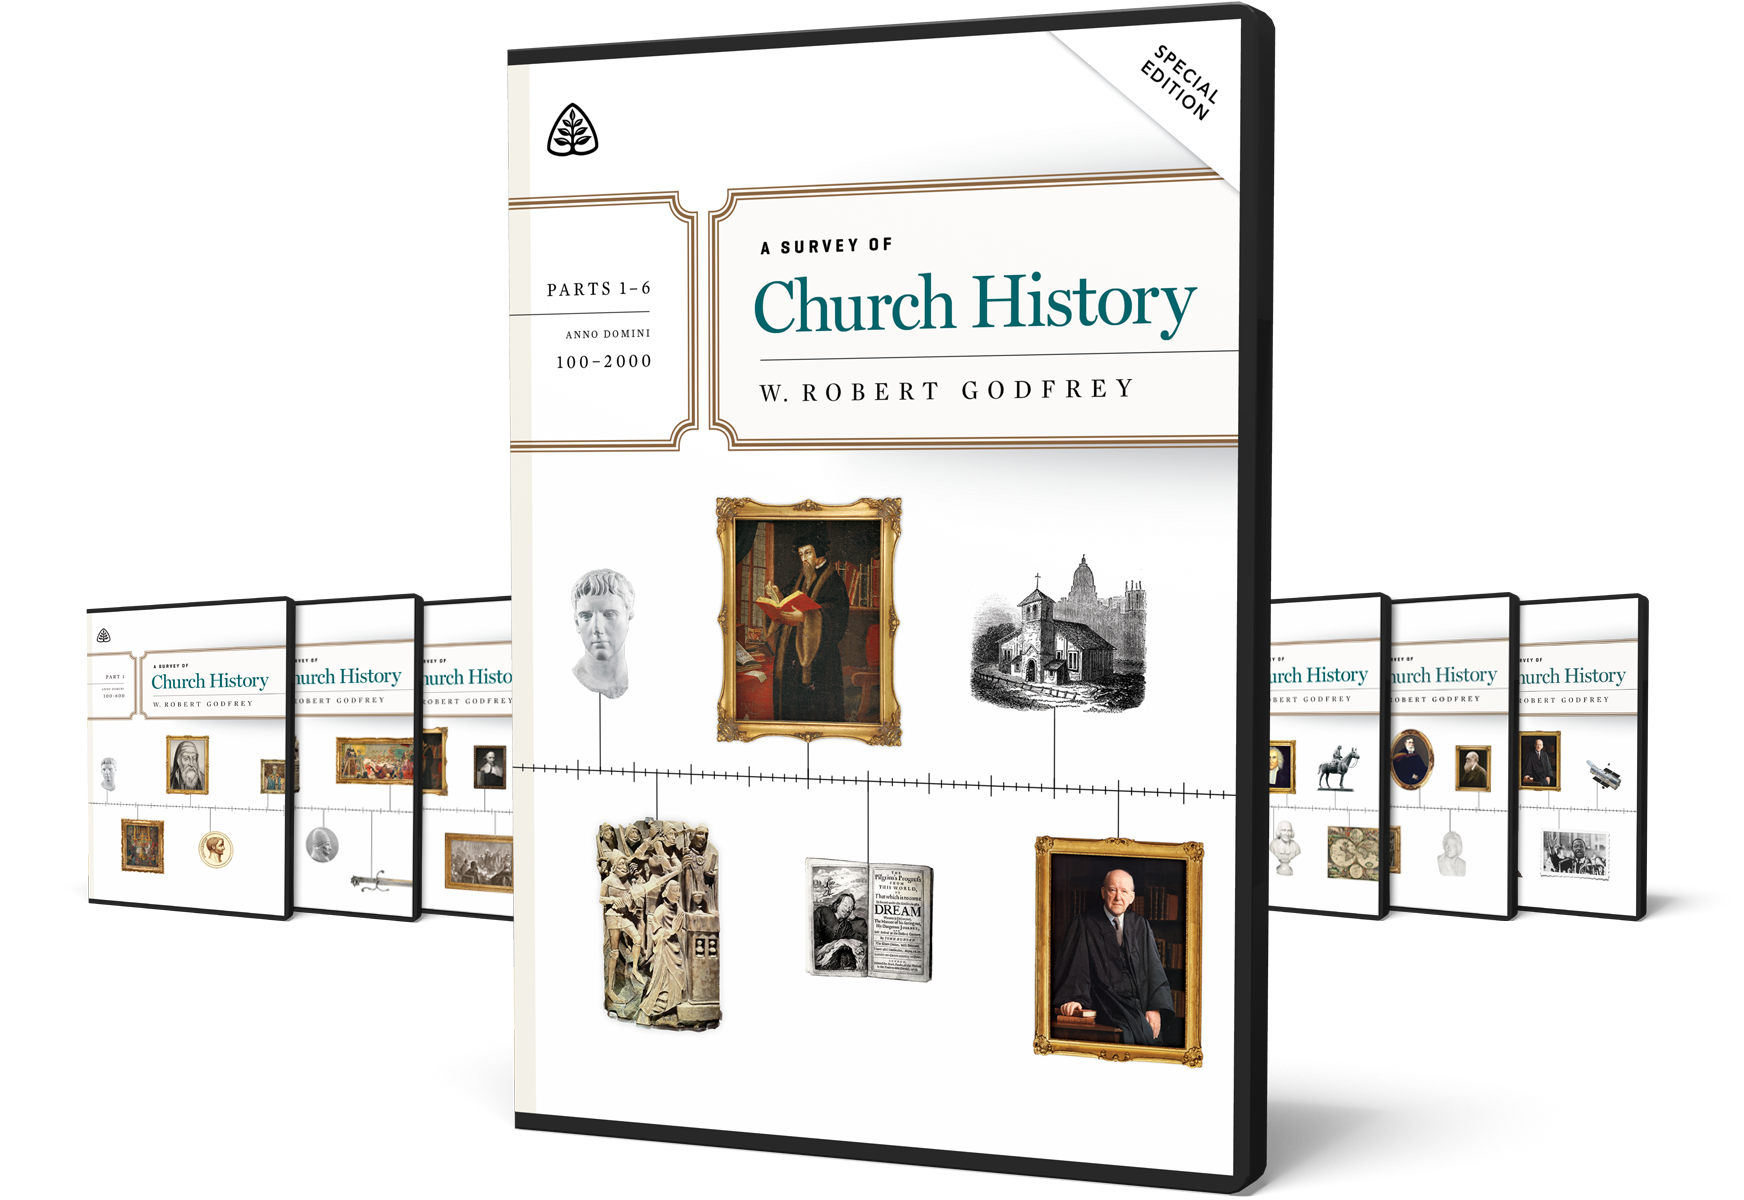 A Survey of Church History, Part 6 A.D. 1900-2000